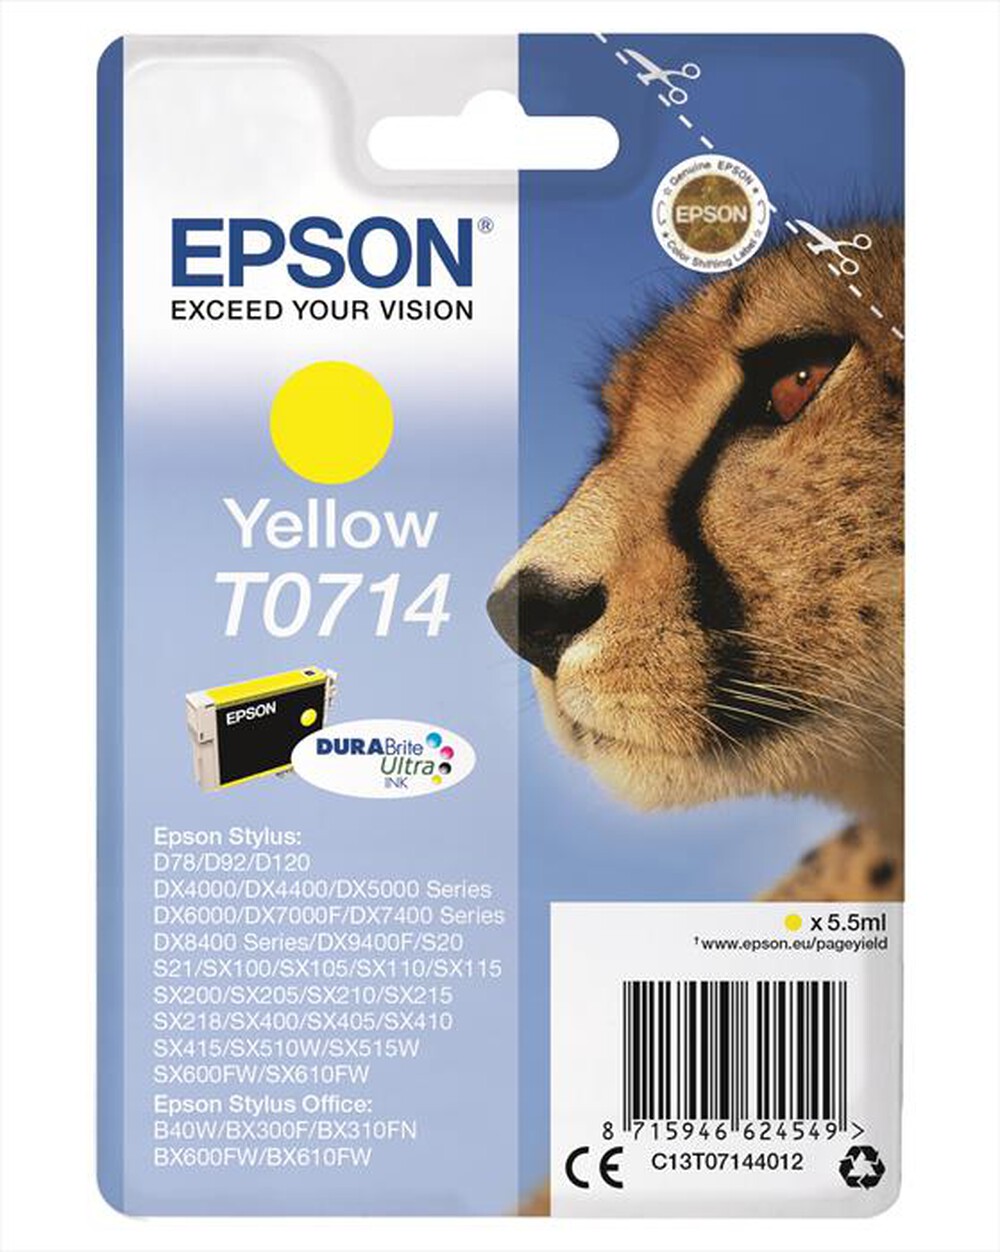 "EPSON - Cartuccia inchiostro giallo C13T07144021-Giallo"